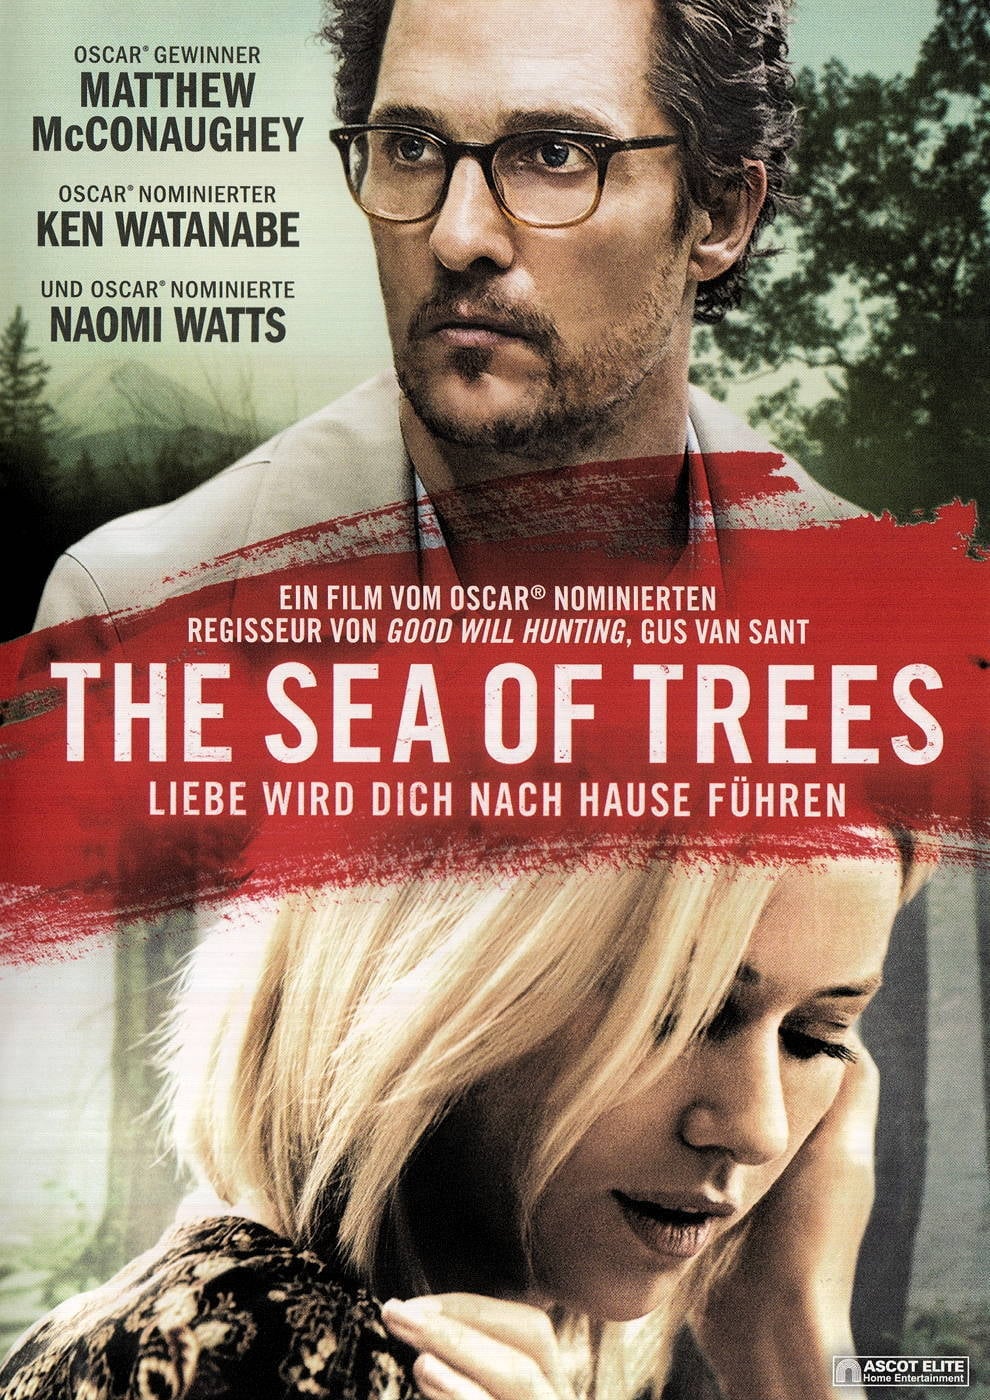 Plakat von "The Sea of Trees"